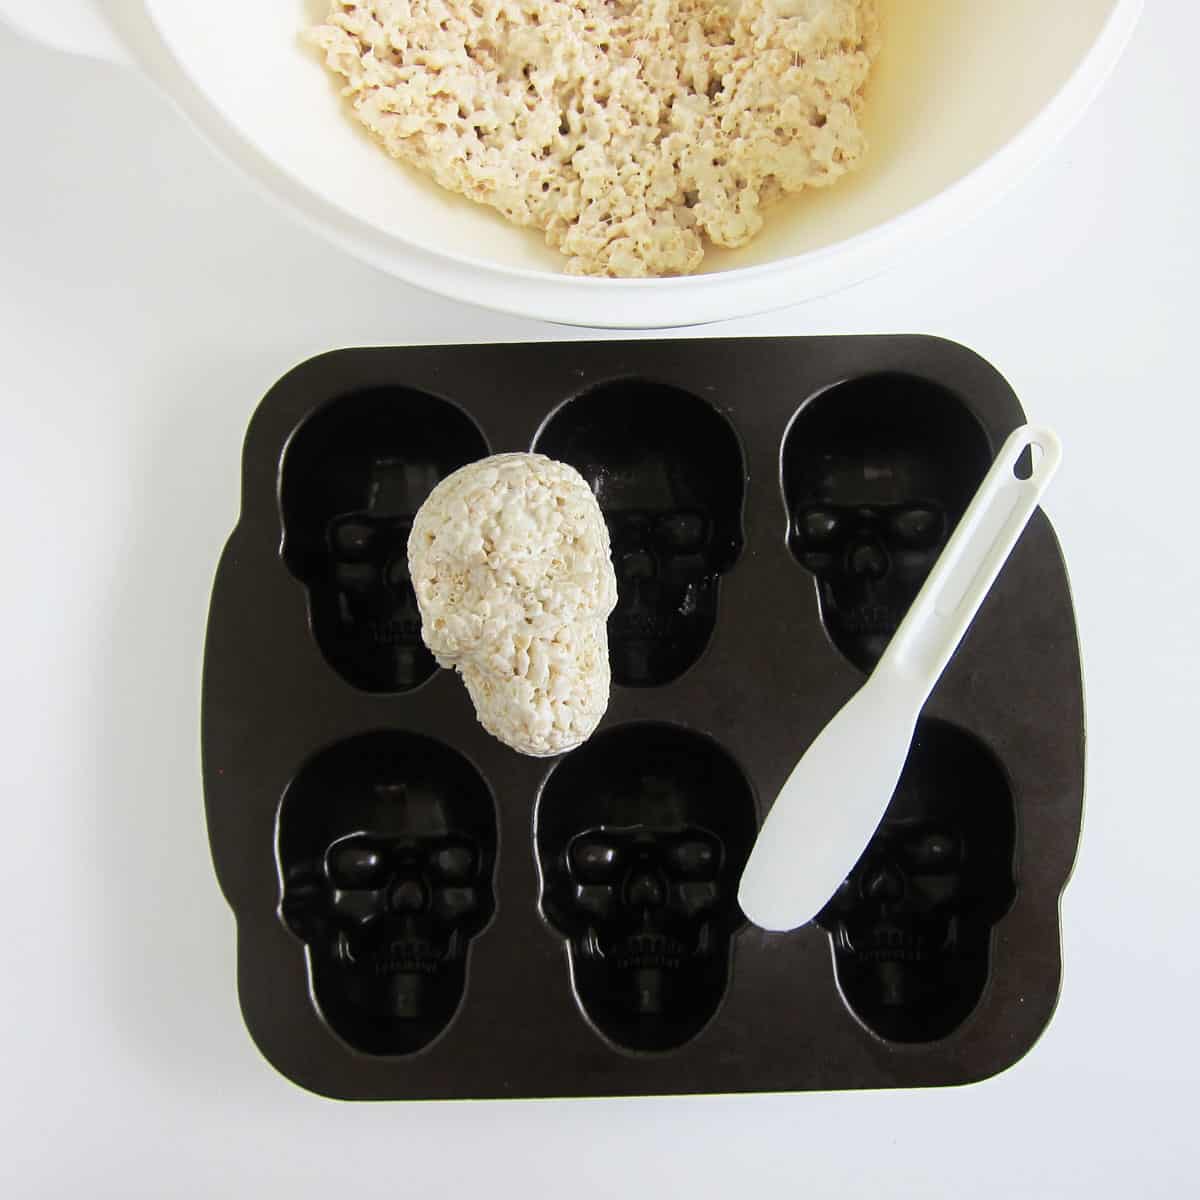 shaped Rice Krispie Treat skull set on the non-stick skull pan along with a plastic blender scraper.